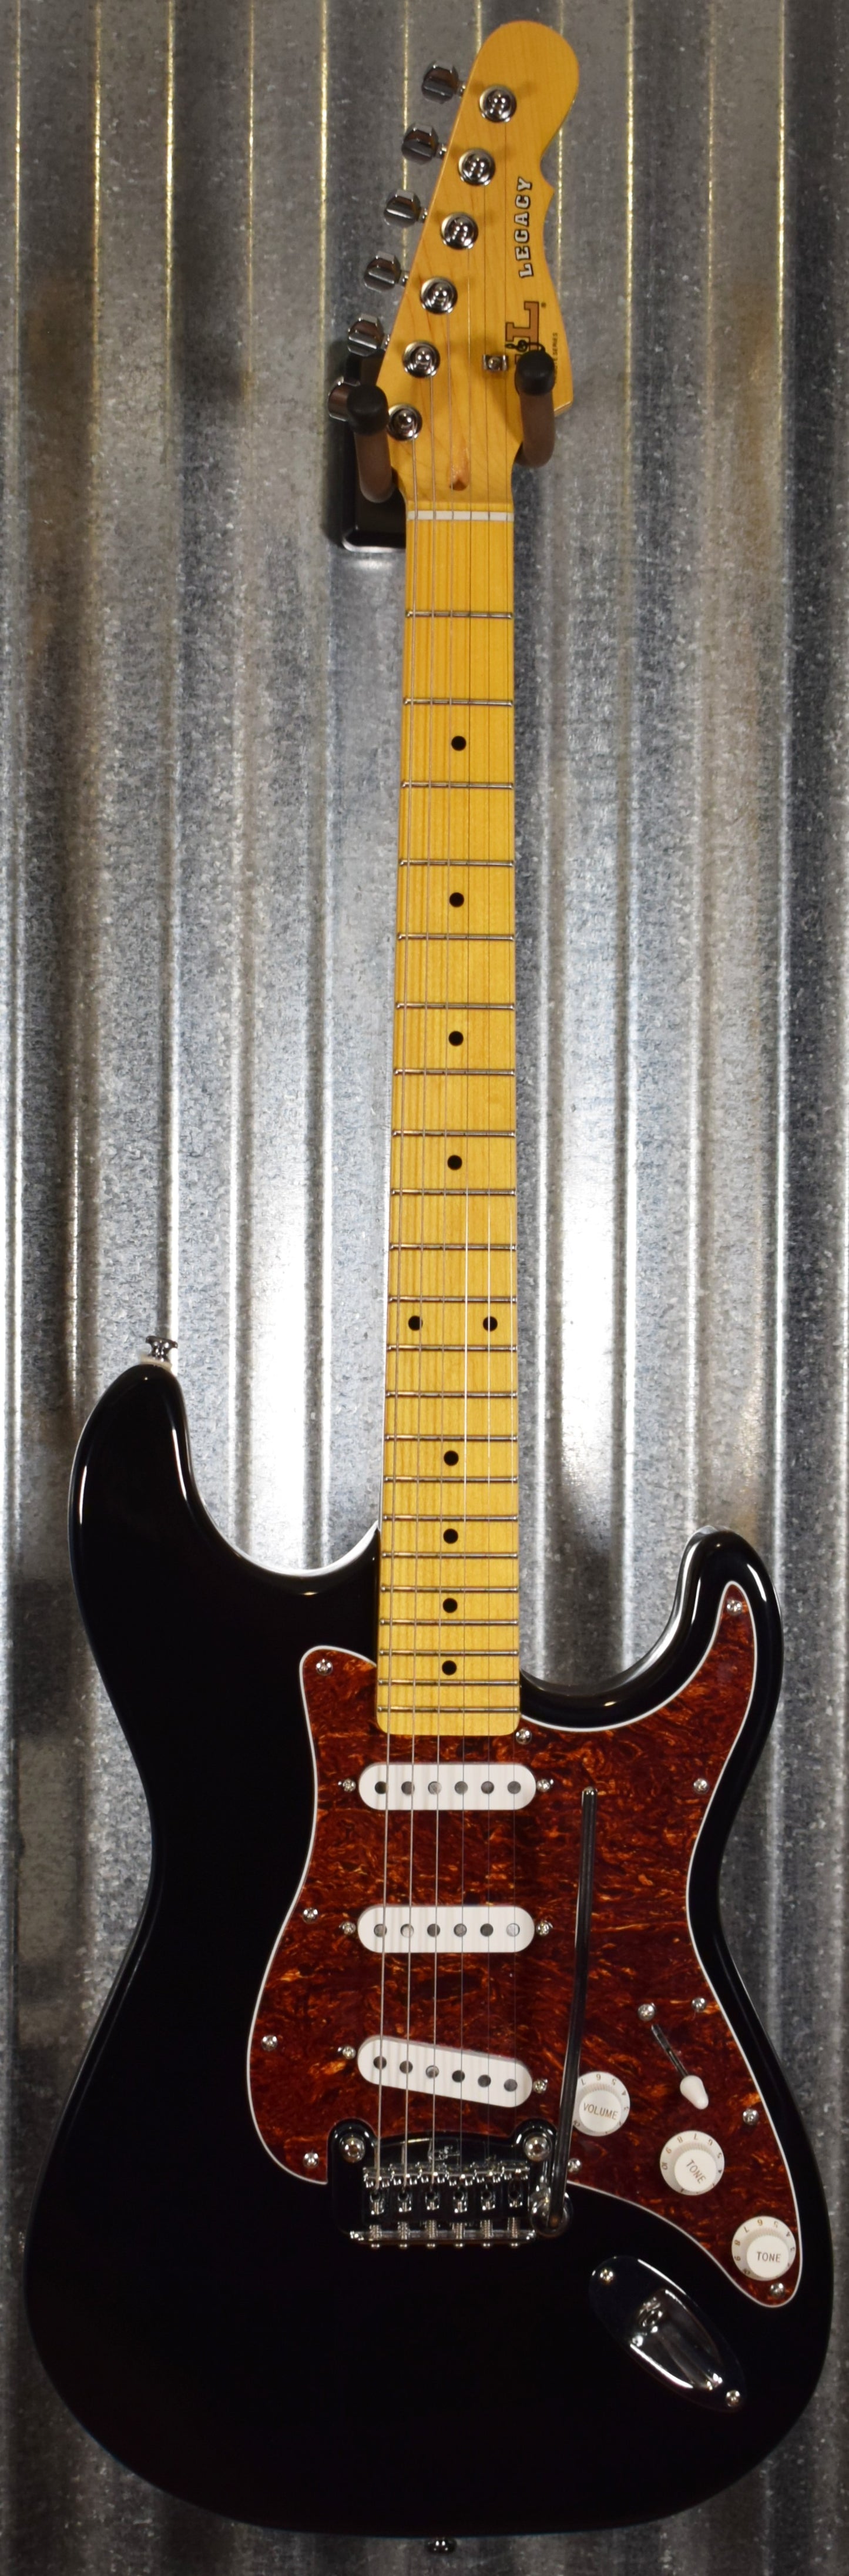 G&L Tribute Legacy Black Guitar #0321 Used